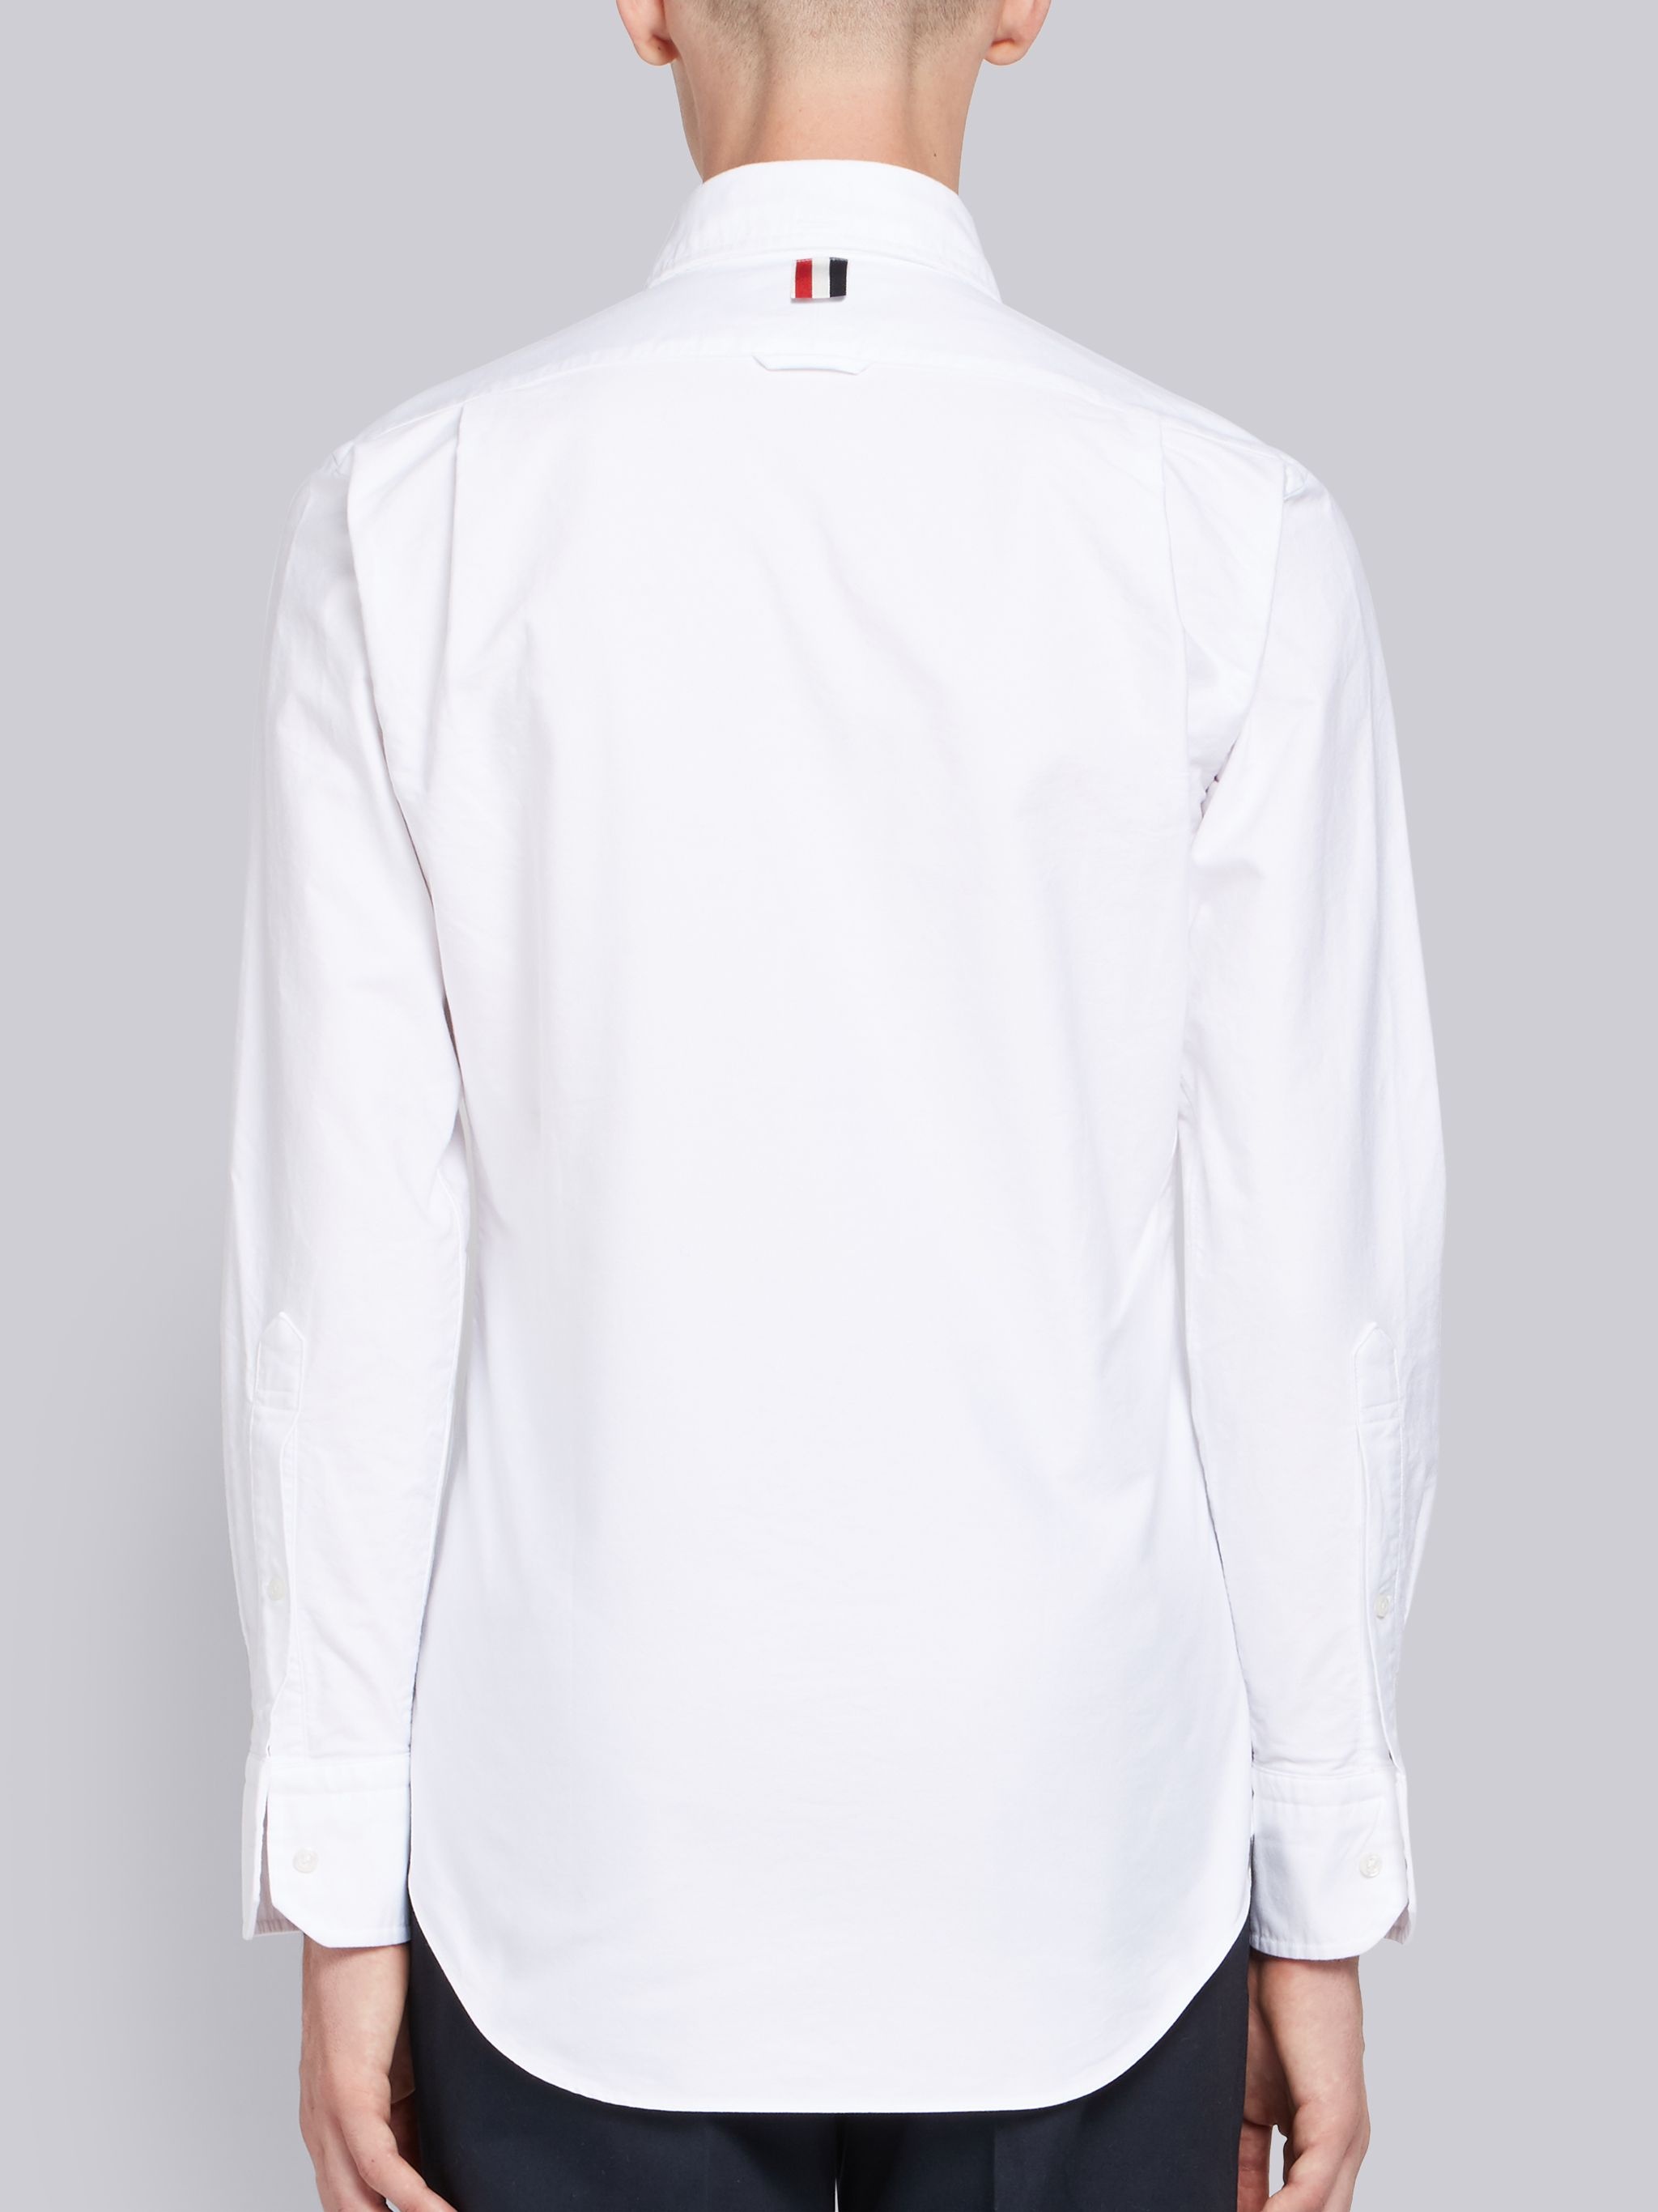 White Cotton Oxford Grosgrain Placket Shirt - 3